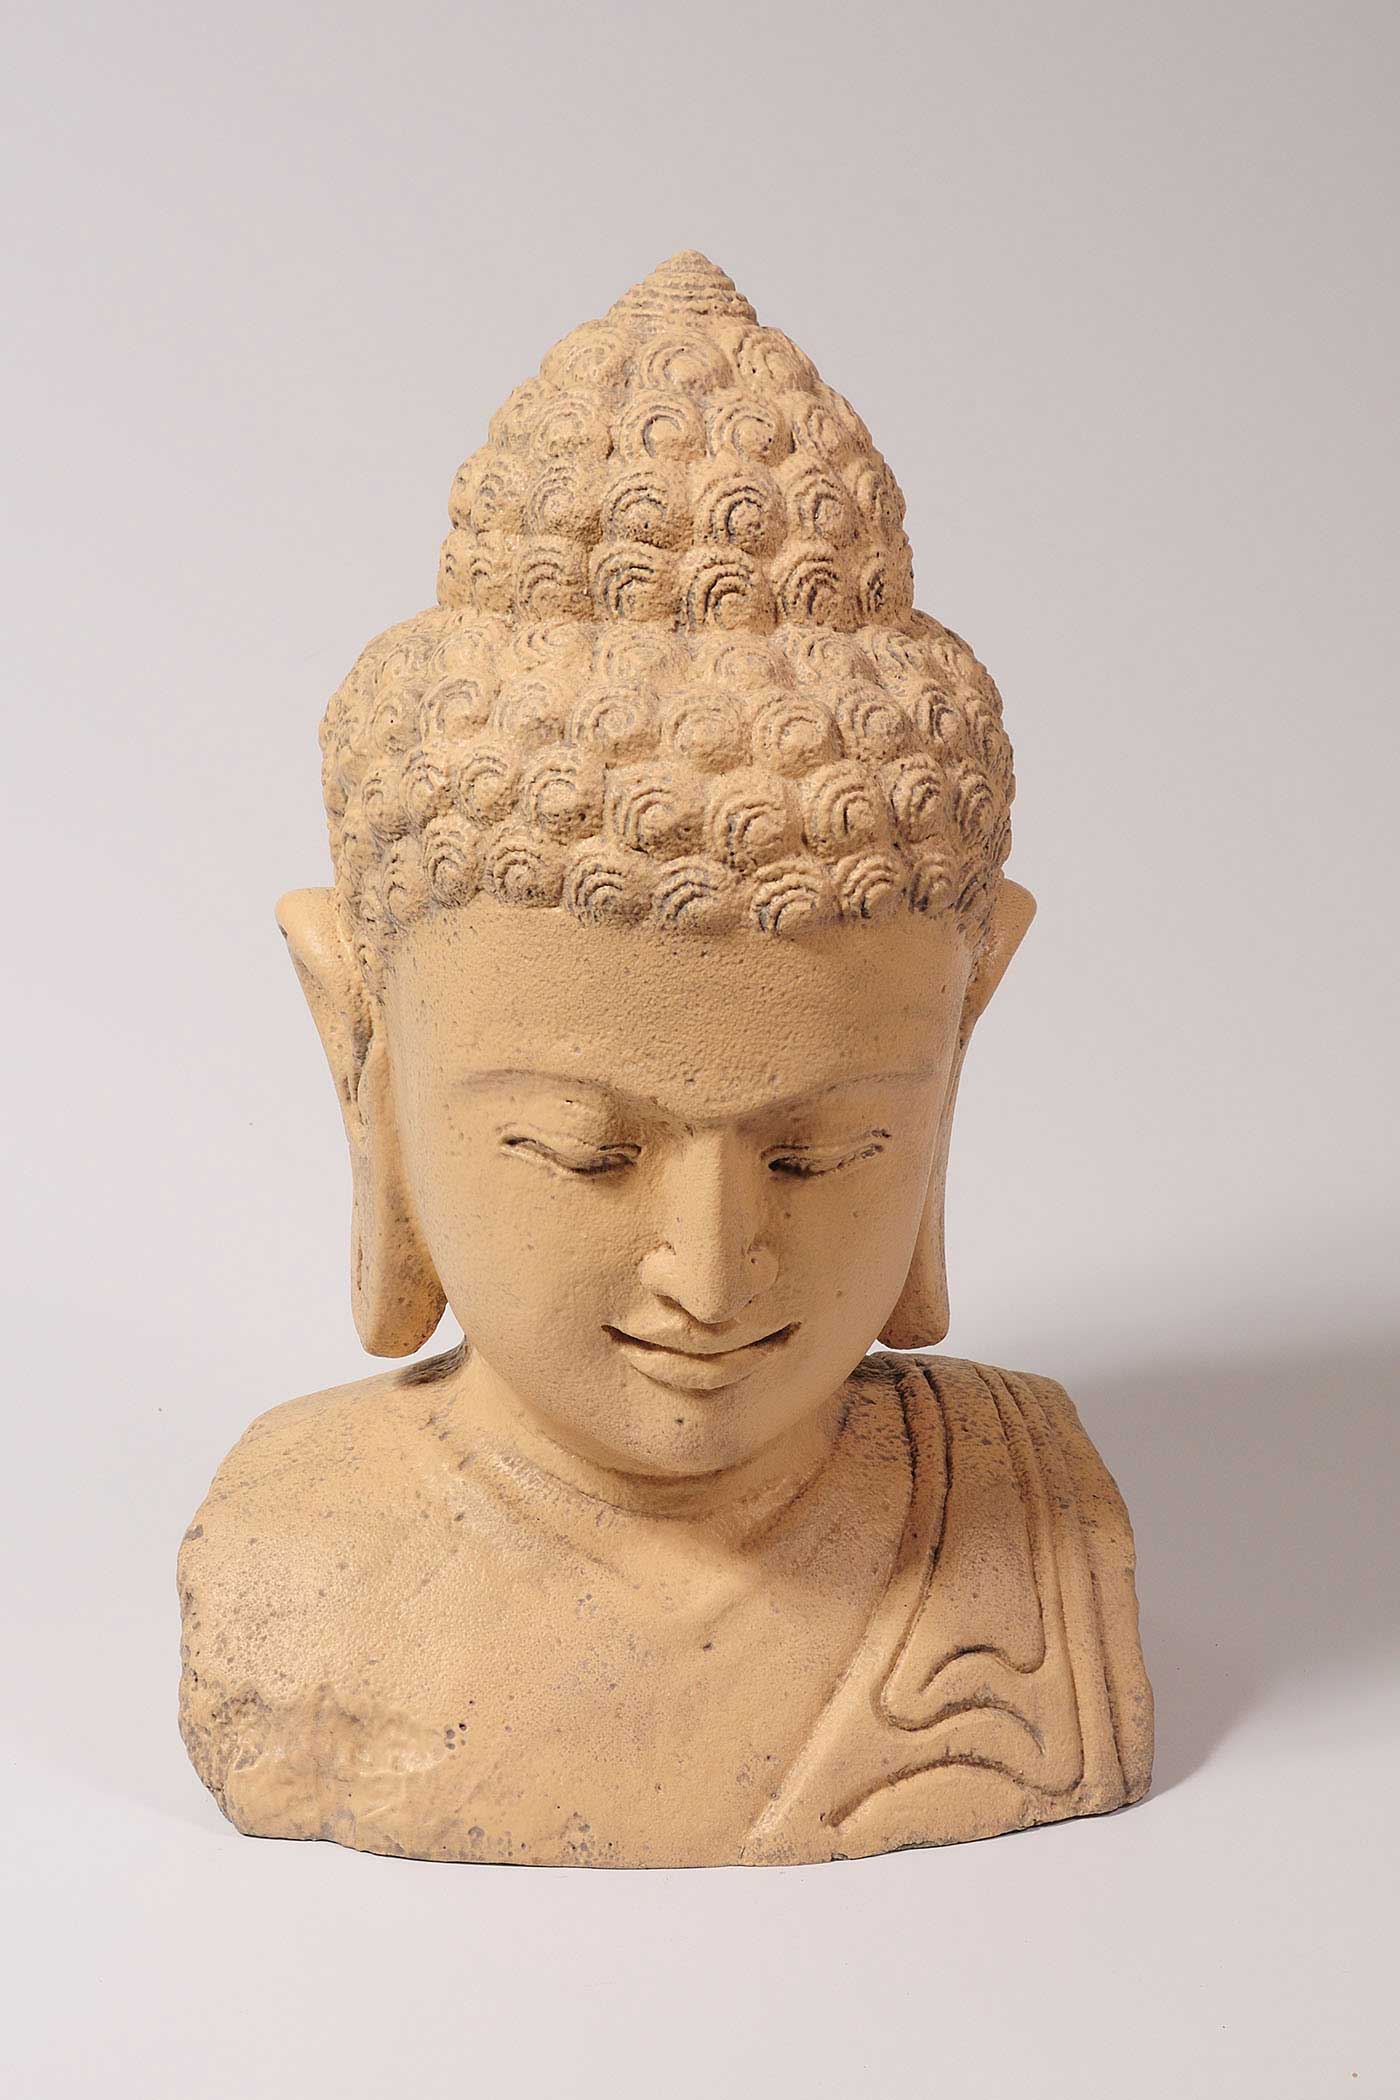 Buddha as a stone ornament